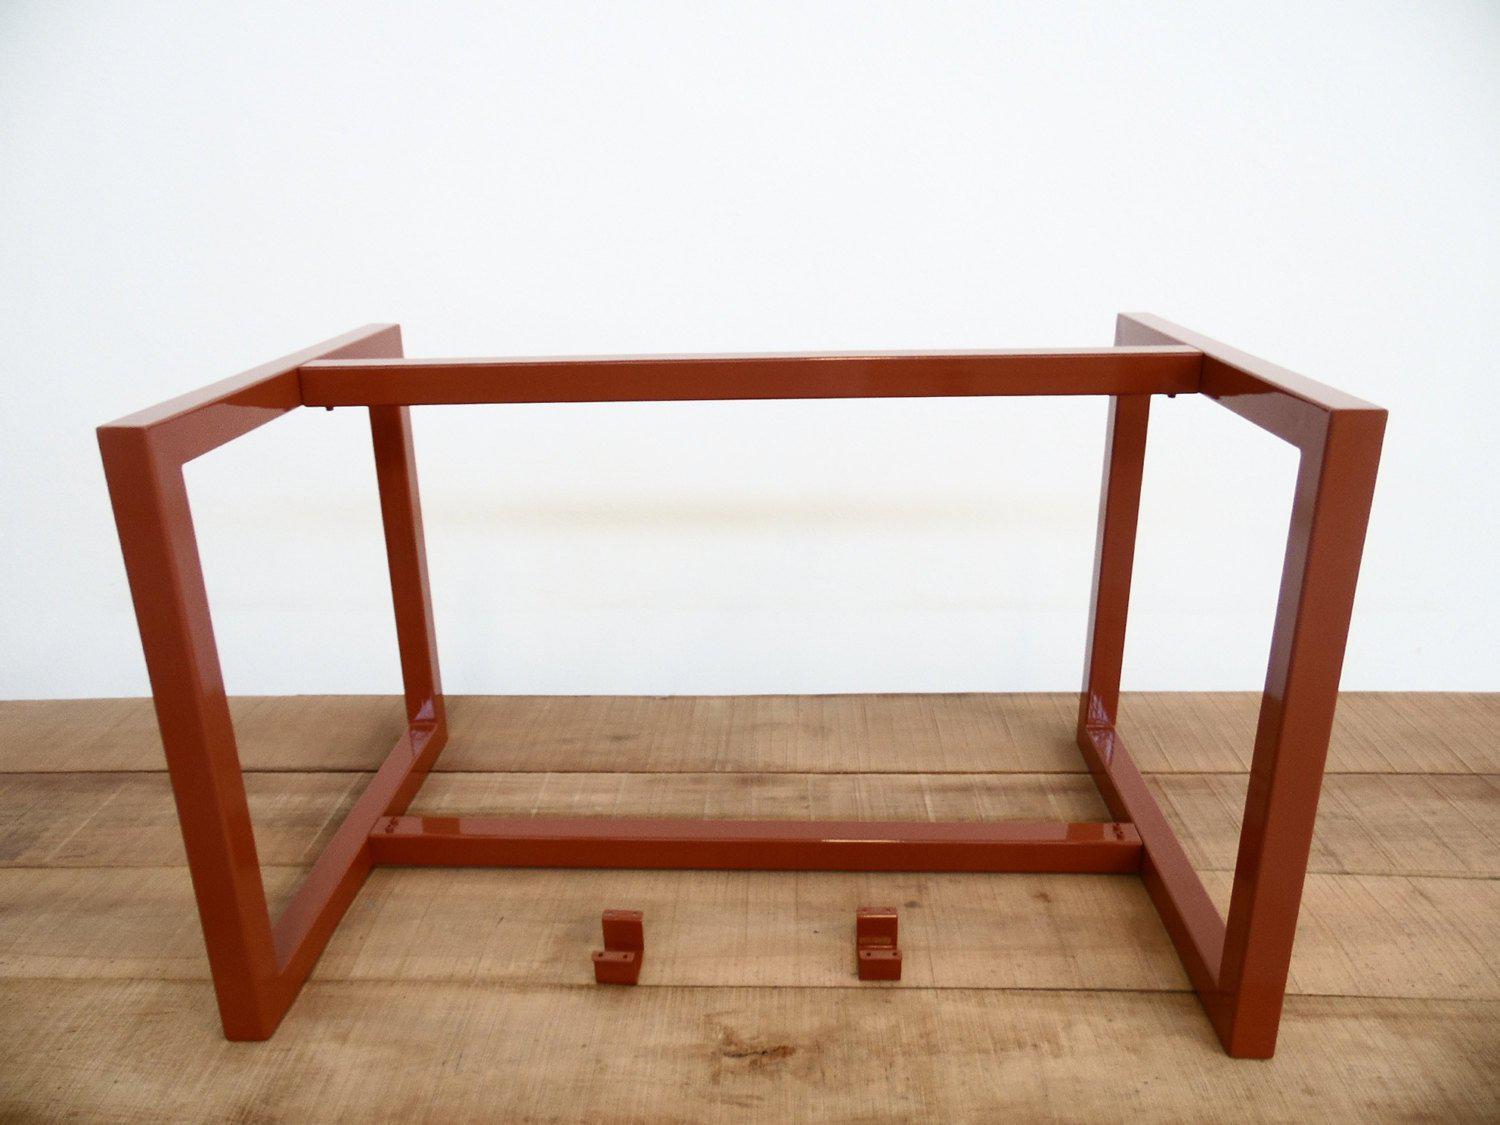 28" X 24 - Apart 42" Frame Long Table Base